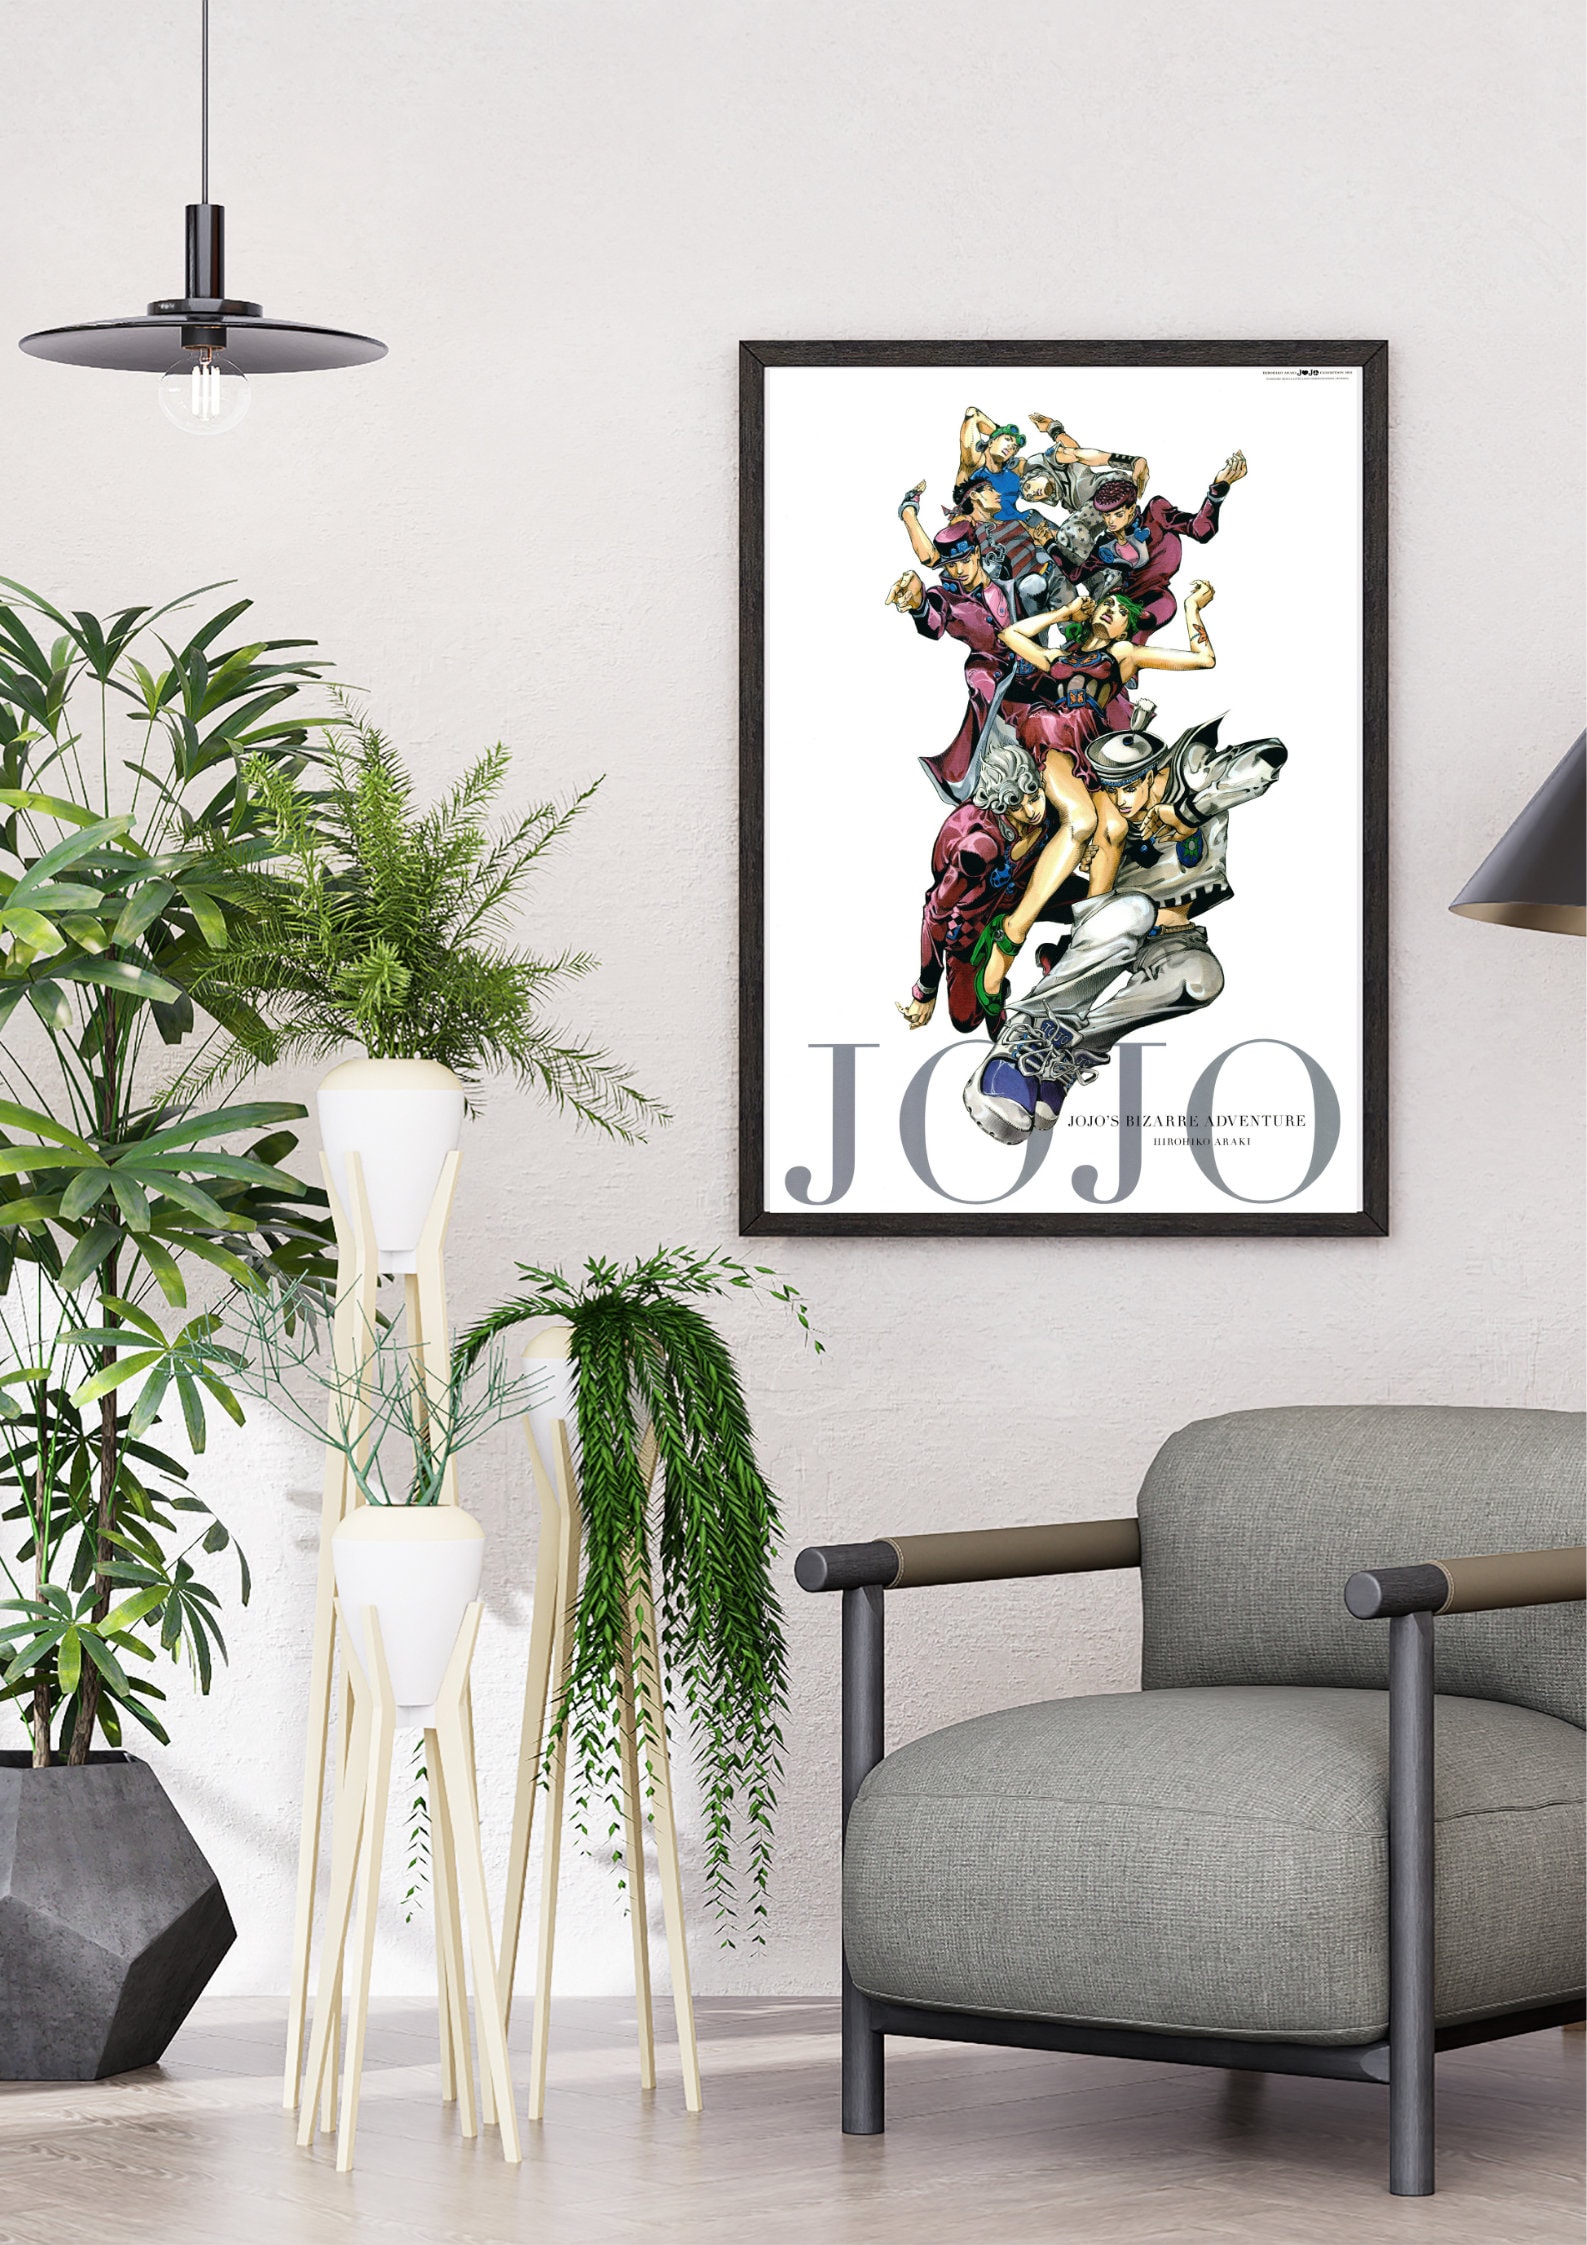 Jojo Stand Art Prints for Sale